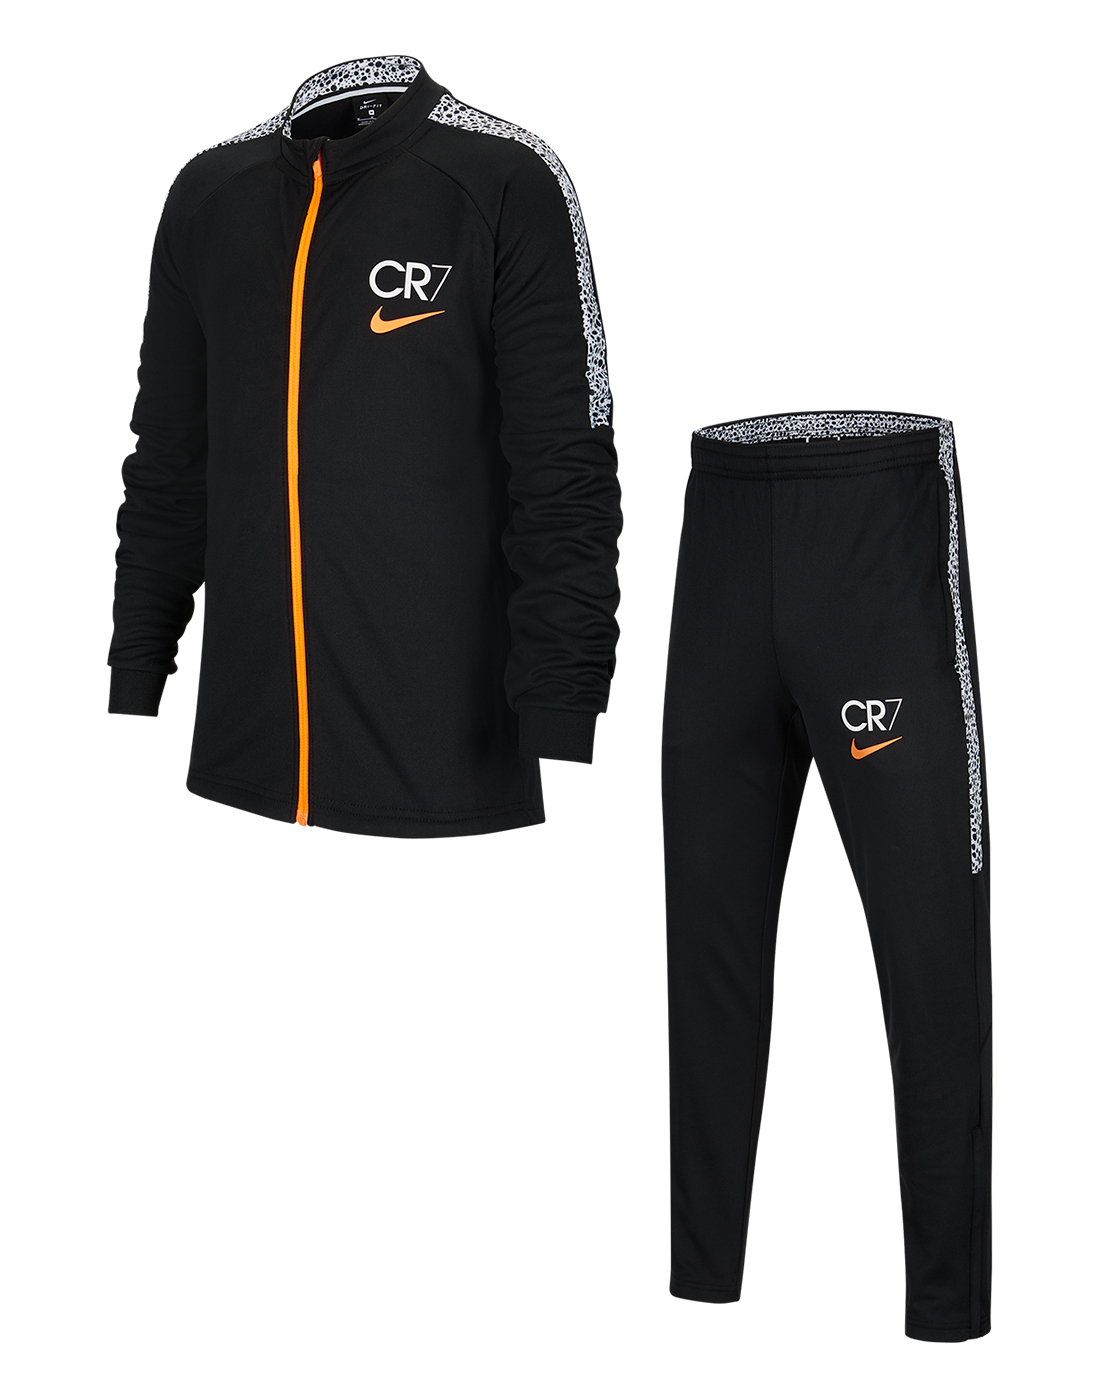 Nike Older Kids CR7 Tracksuit Set - Black | Life Style Sports IE